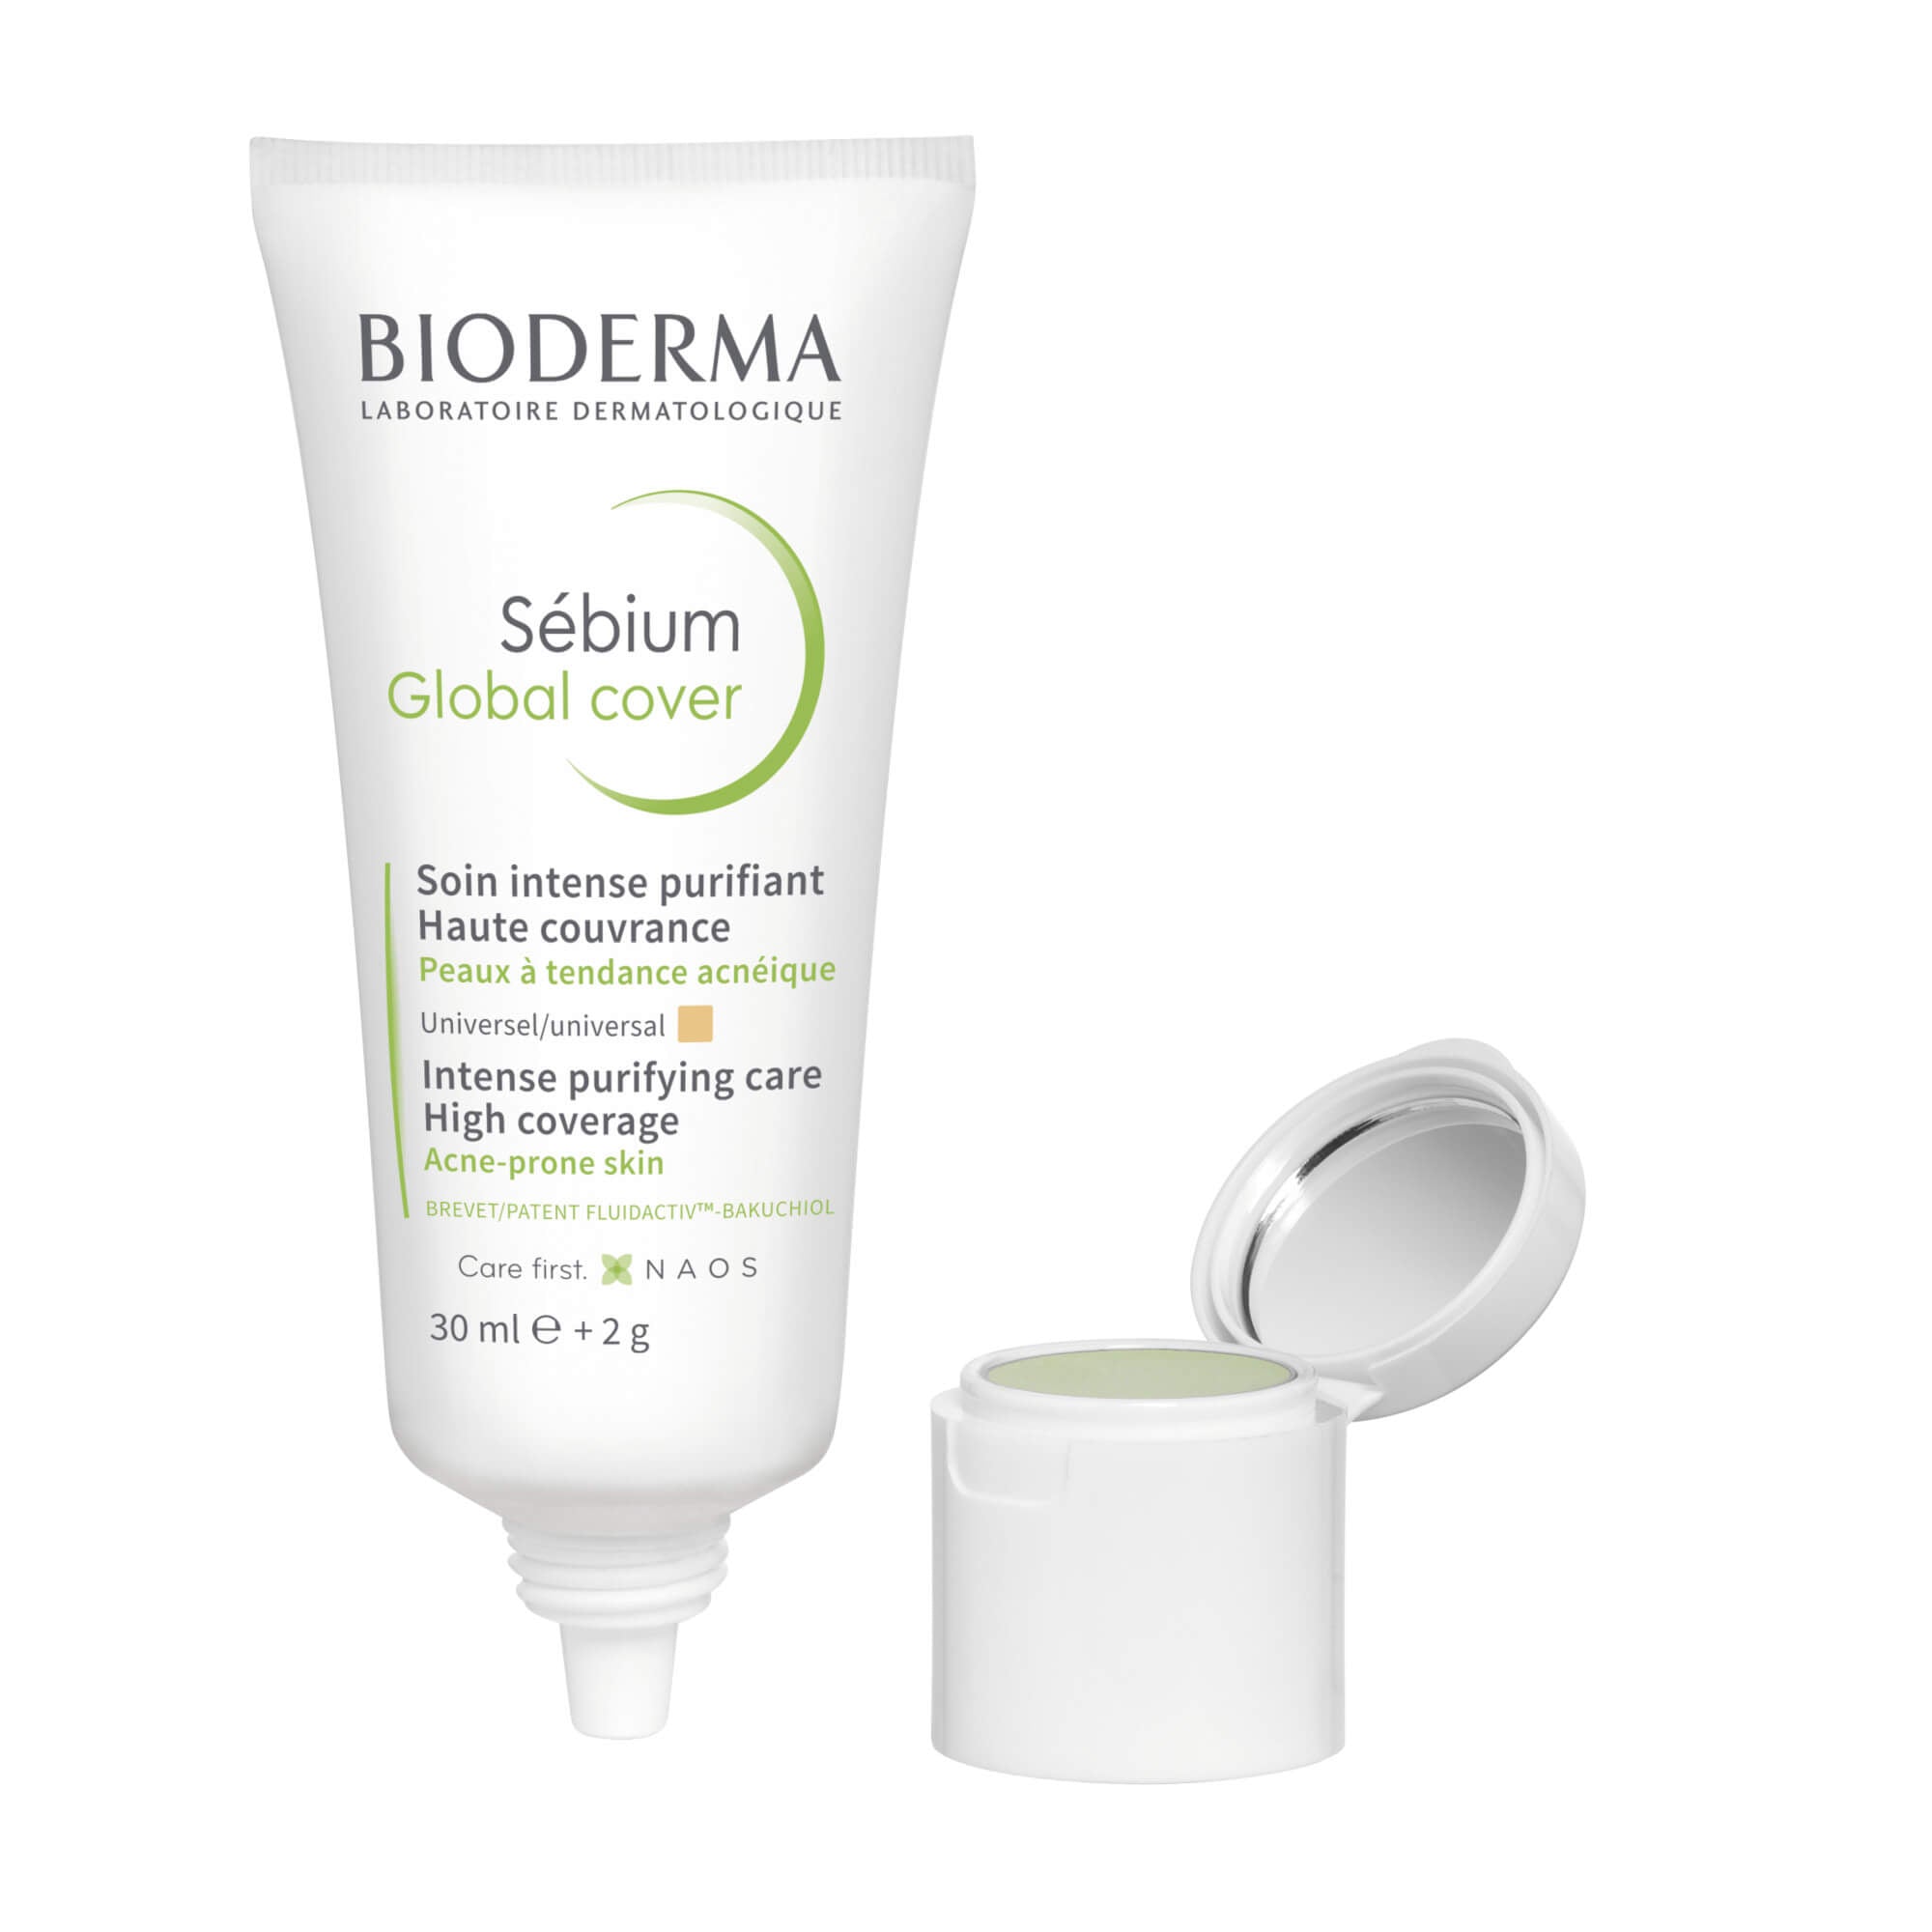 Bioderma Sebium Global Cover Καθημερινή Φροντίδα Με Χρώμα Για Ακμή & Κηλίδες 30mL - Παρουσίαση